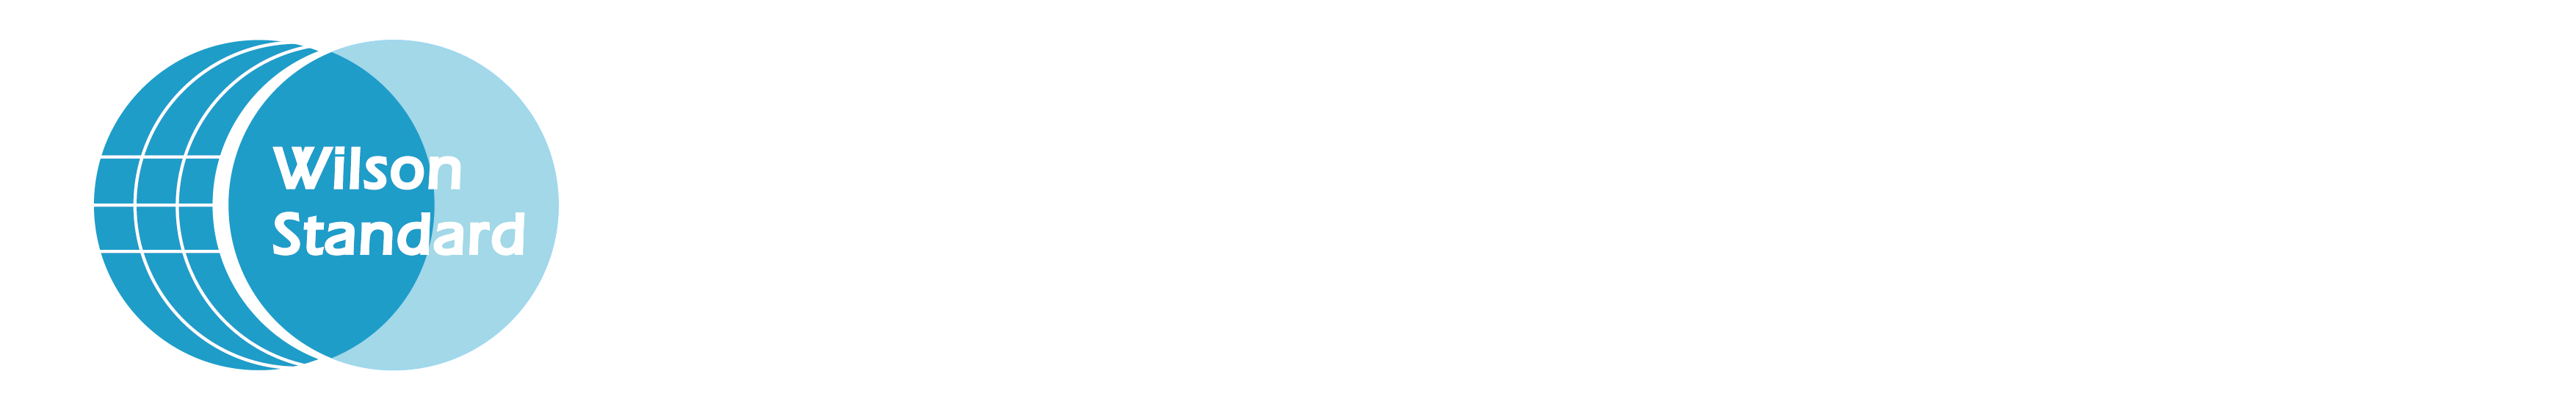 Wilson Standard Test-Consult Limited 偉信標準檢測顧問有限公司